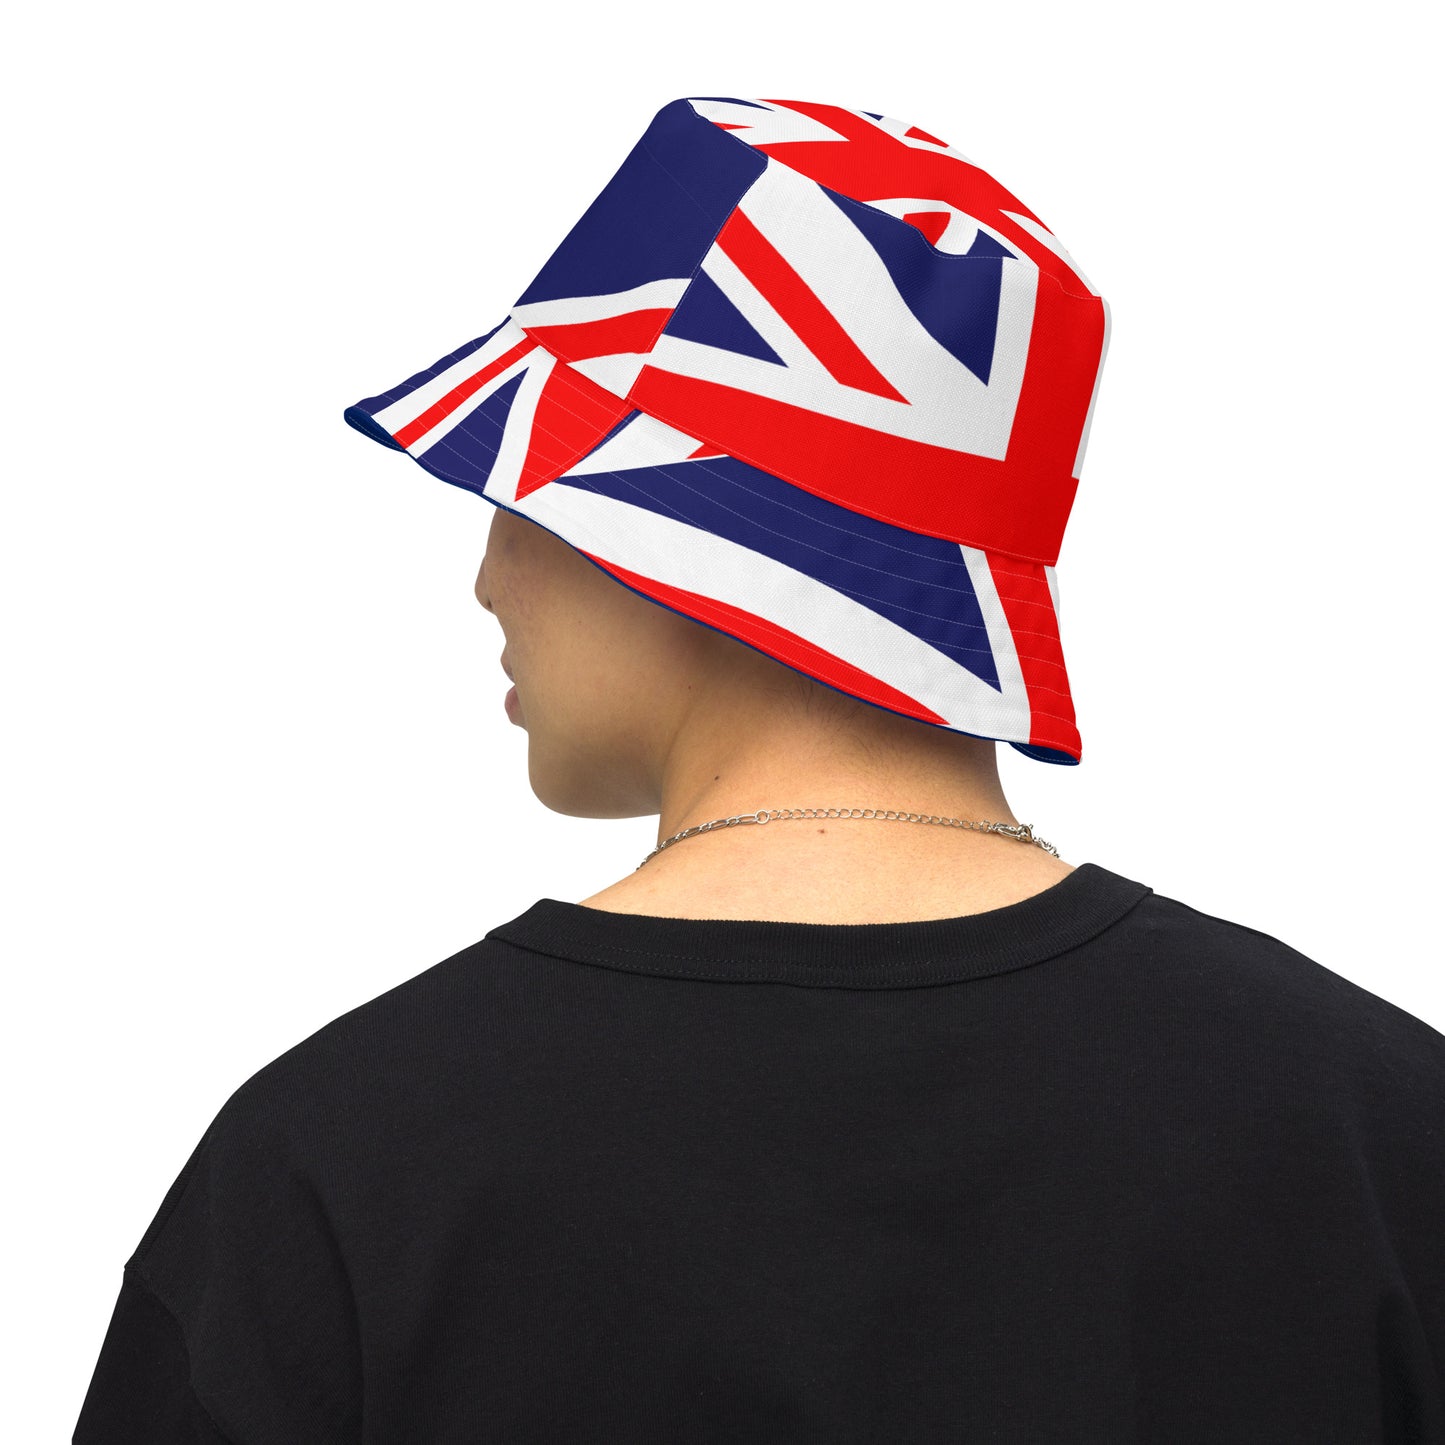 Chapéu Union Jack / Chapéu do Reino Unido / Chapéu Balde Reversível